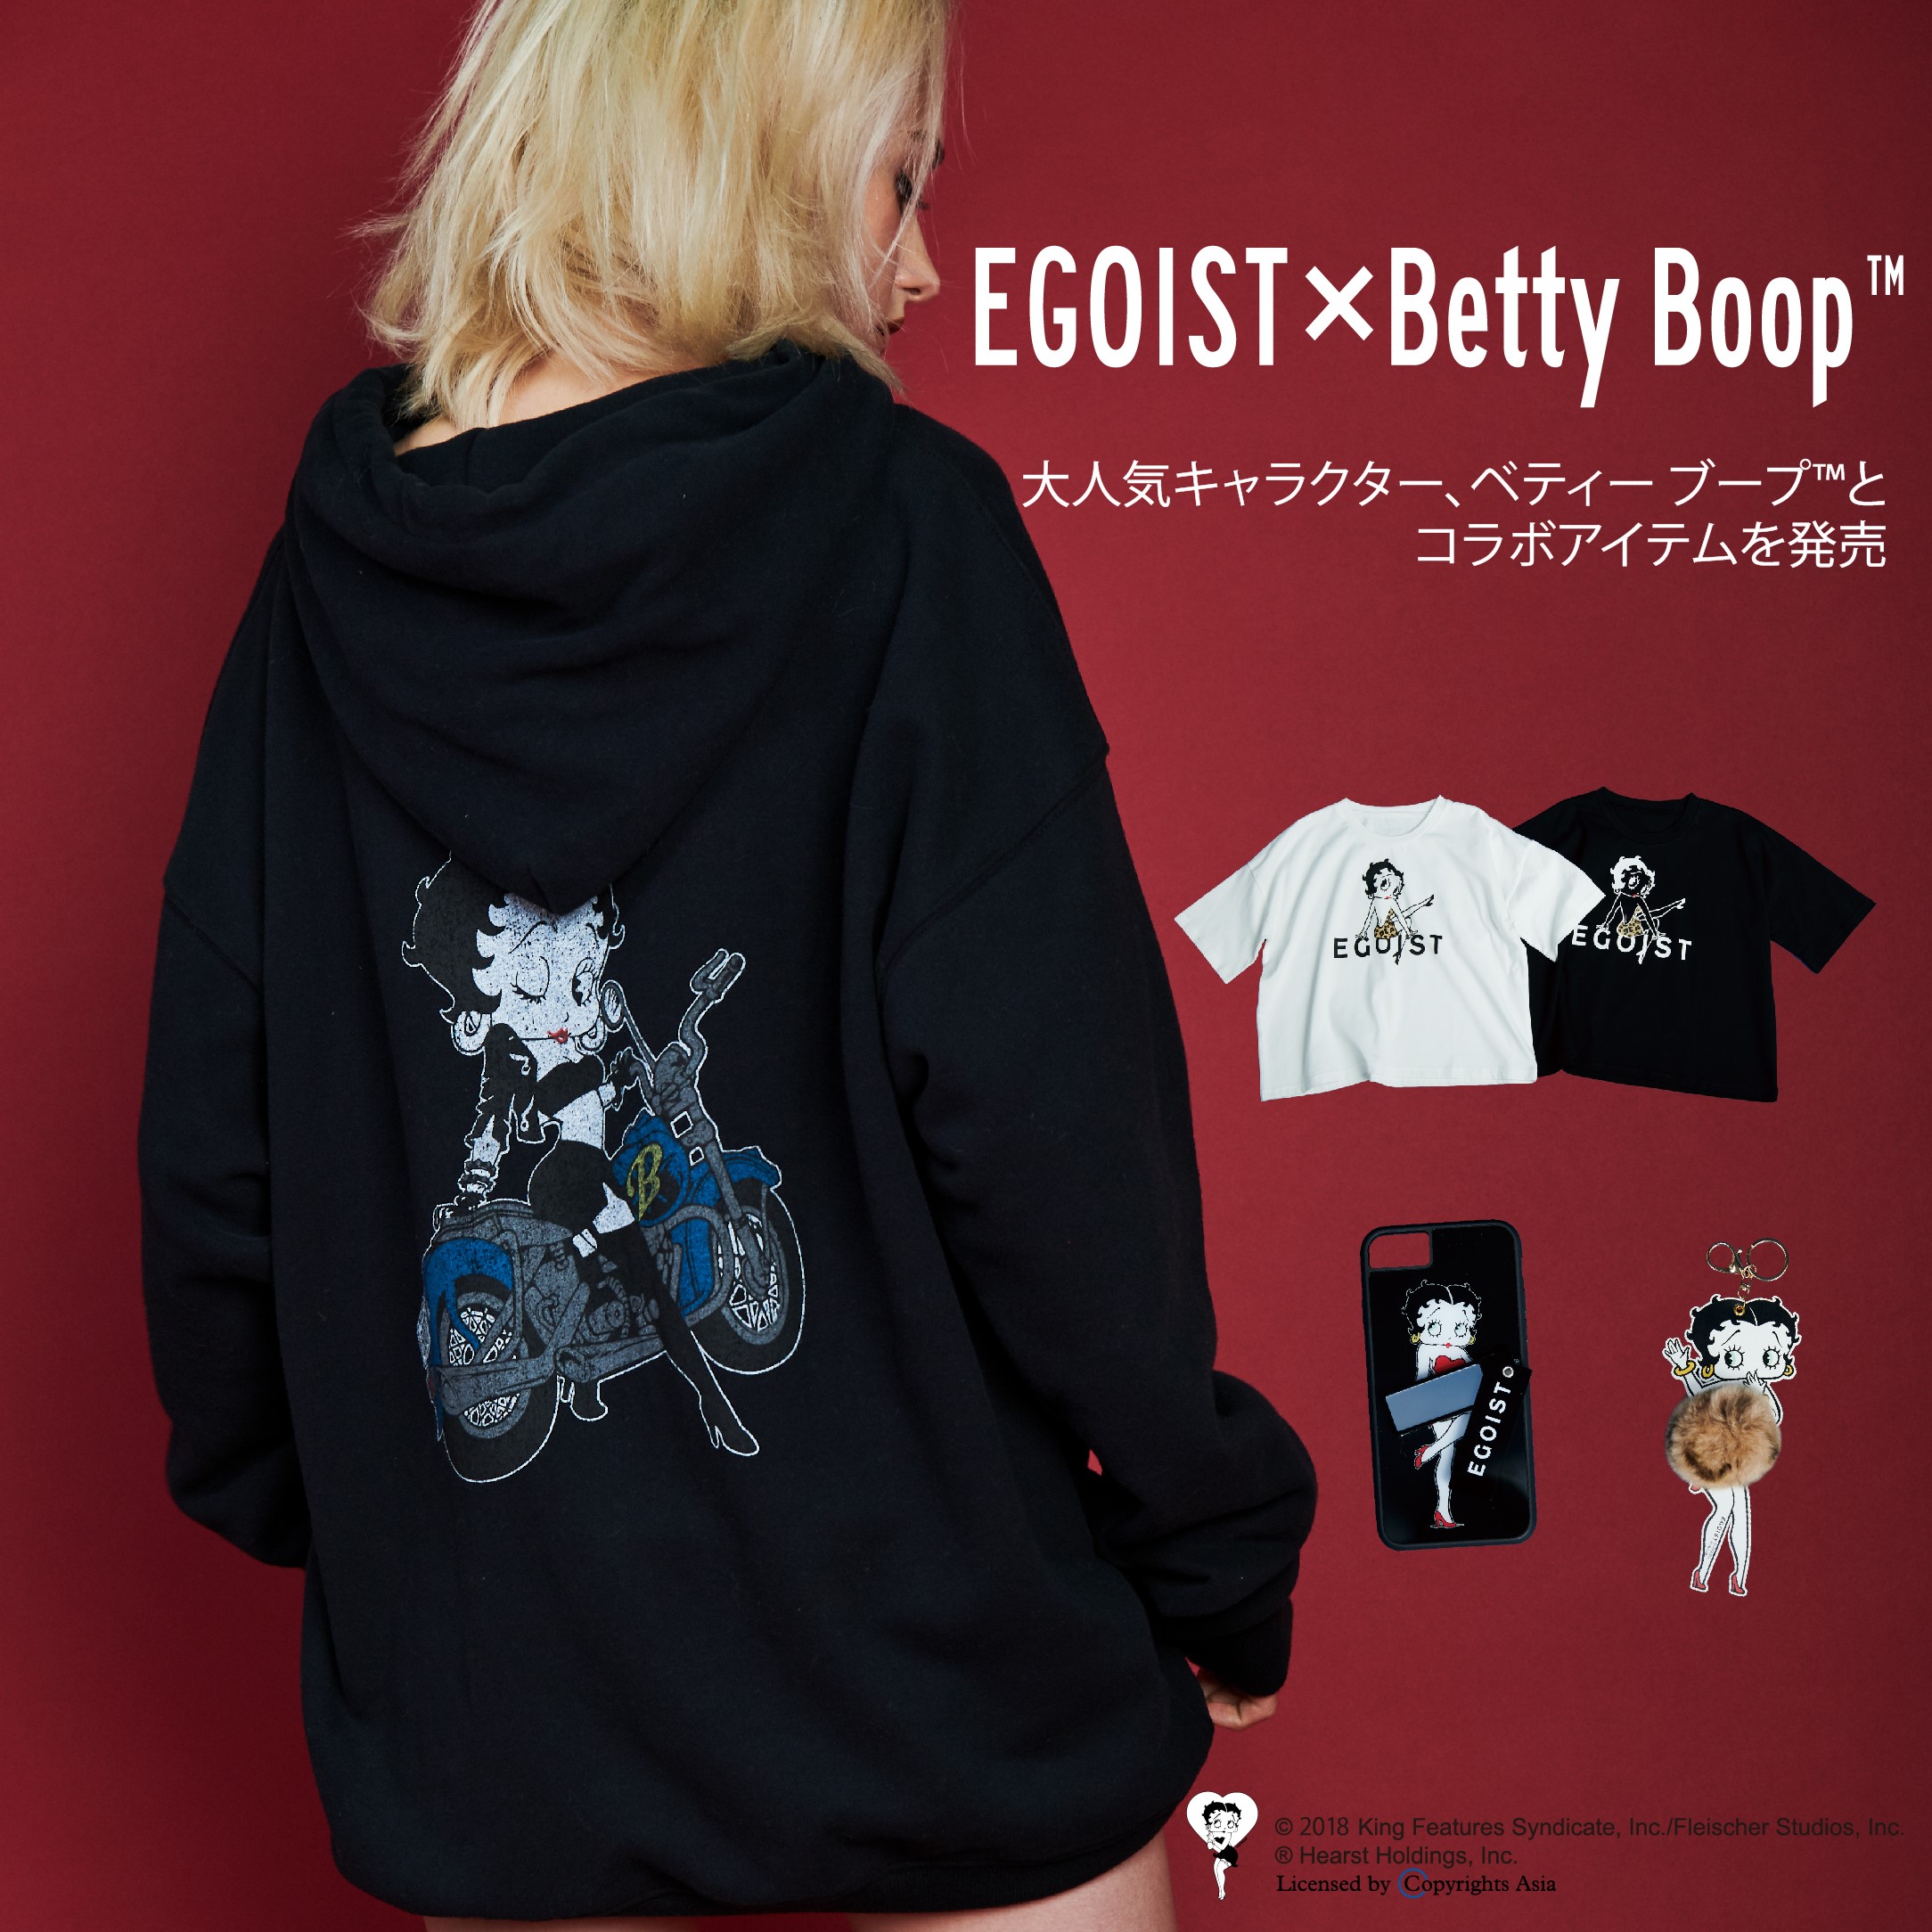 Betty Boop X Egoist 限定コラボレーション Copyrights Asia